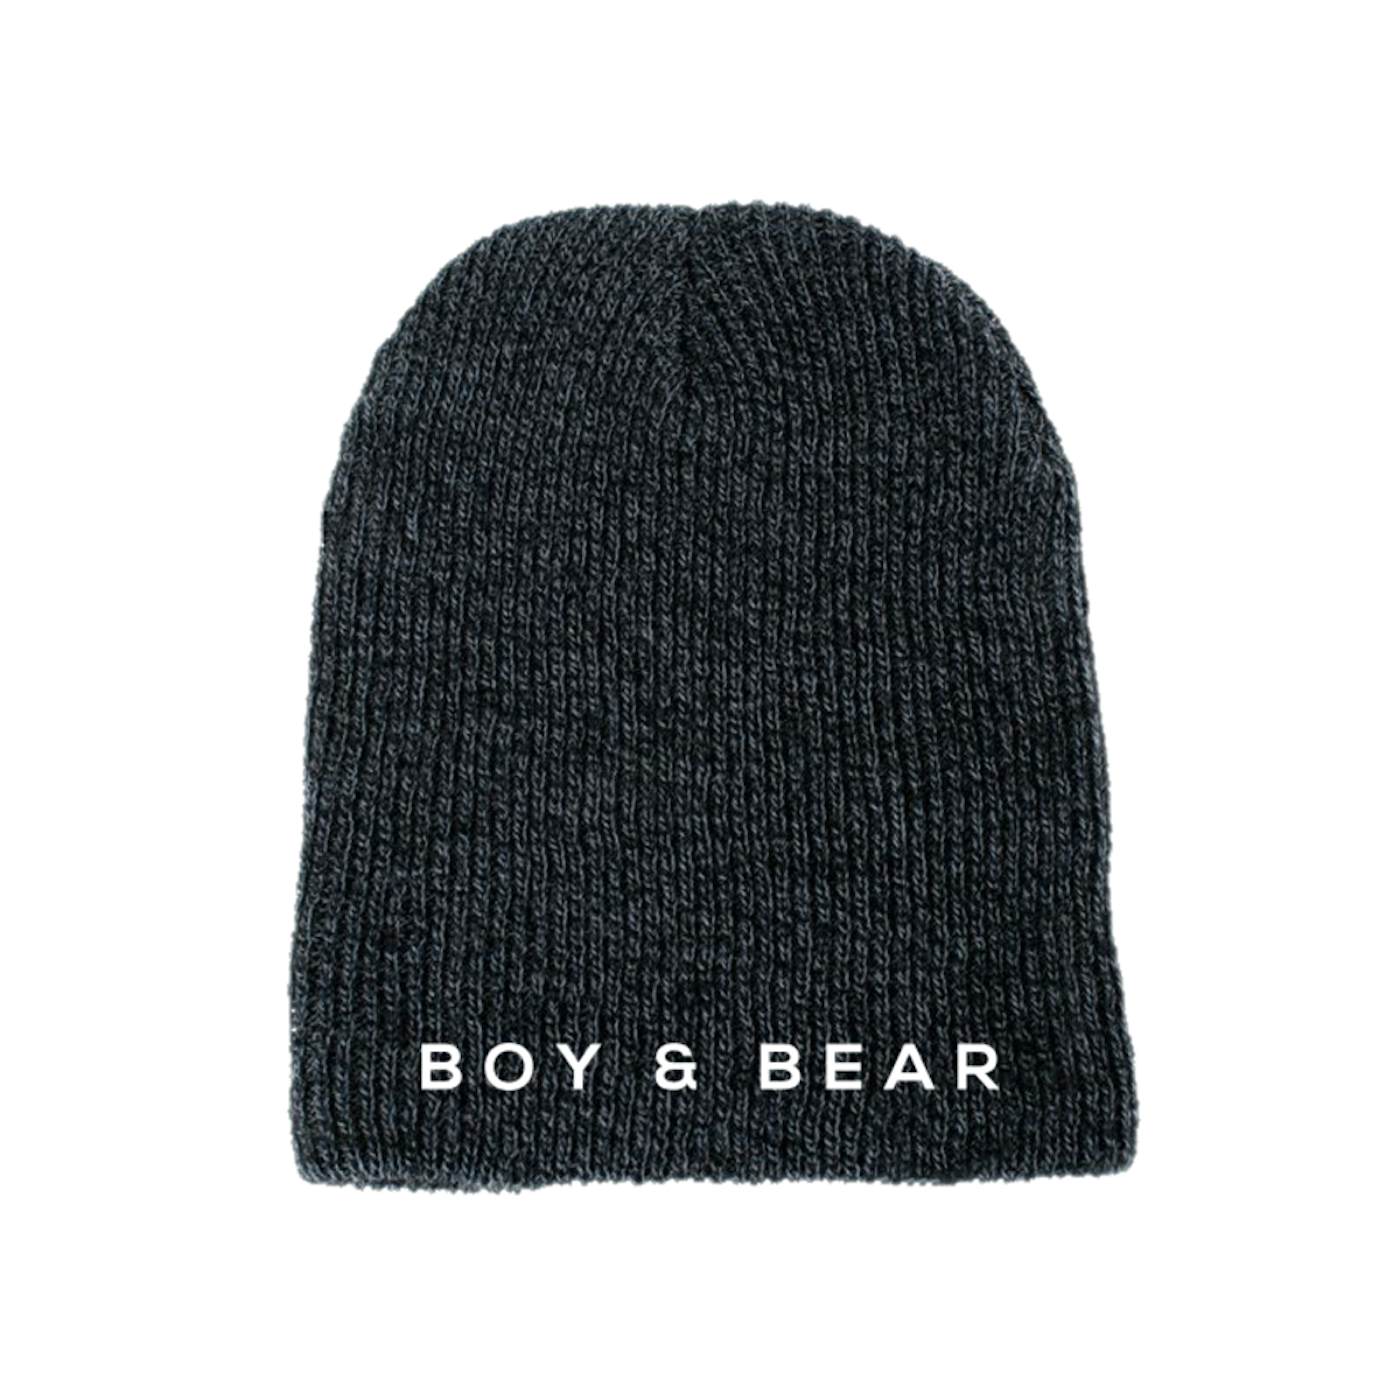 Boy & Bear Logo Beanie